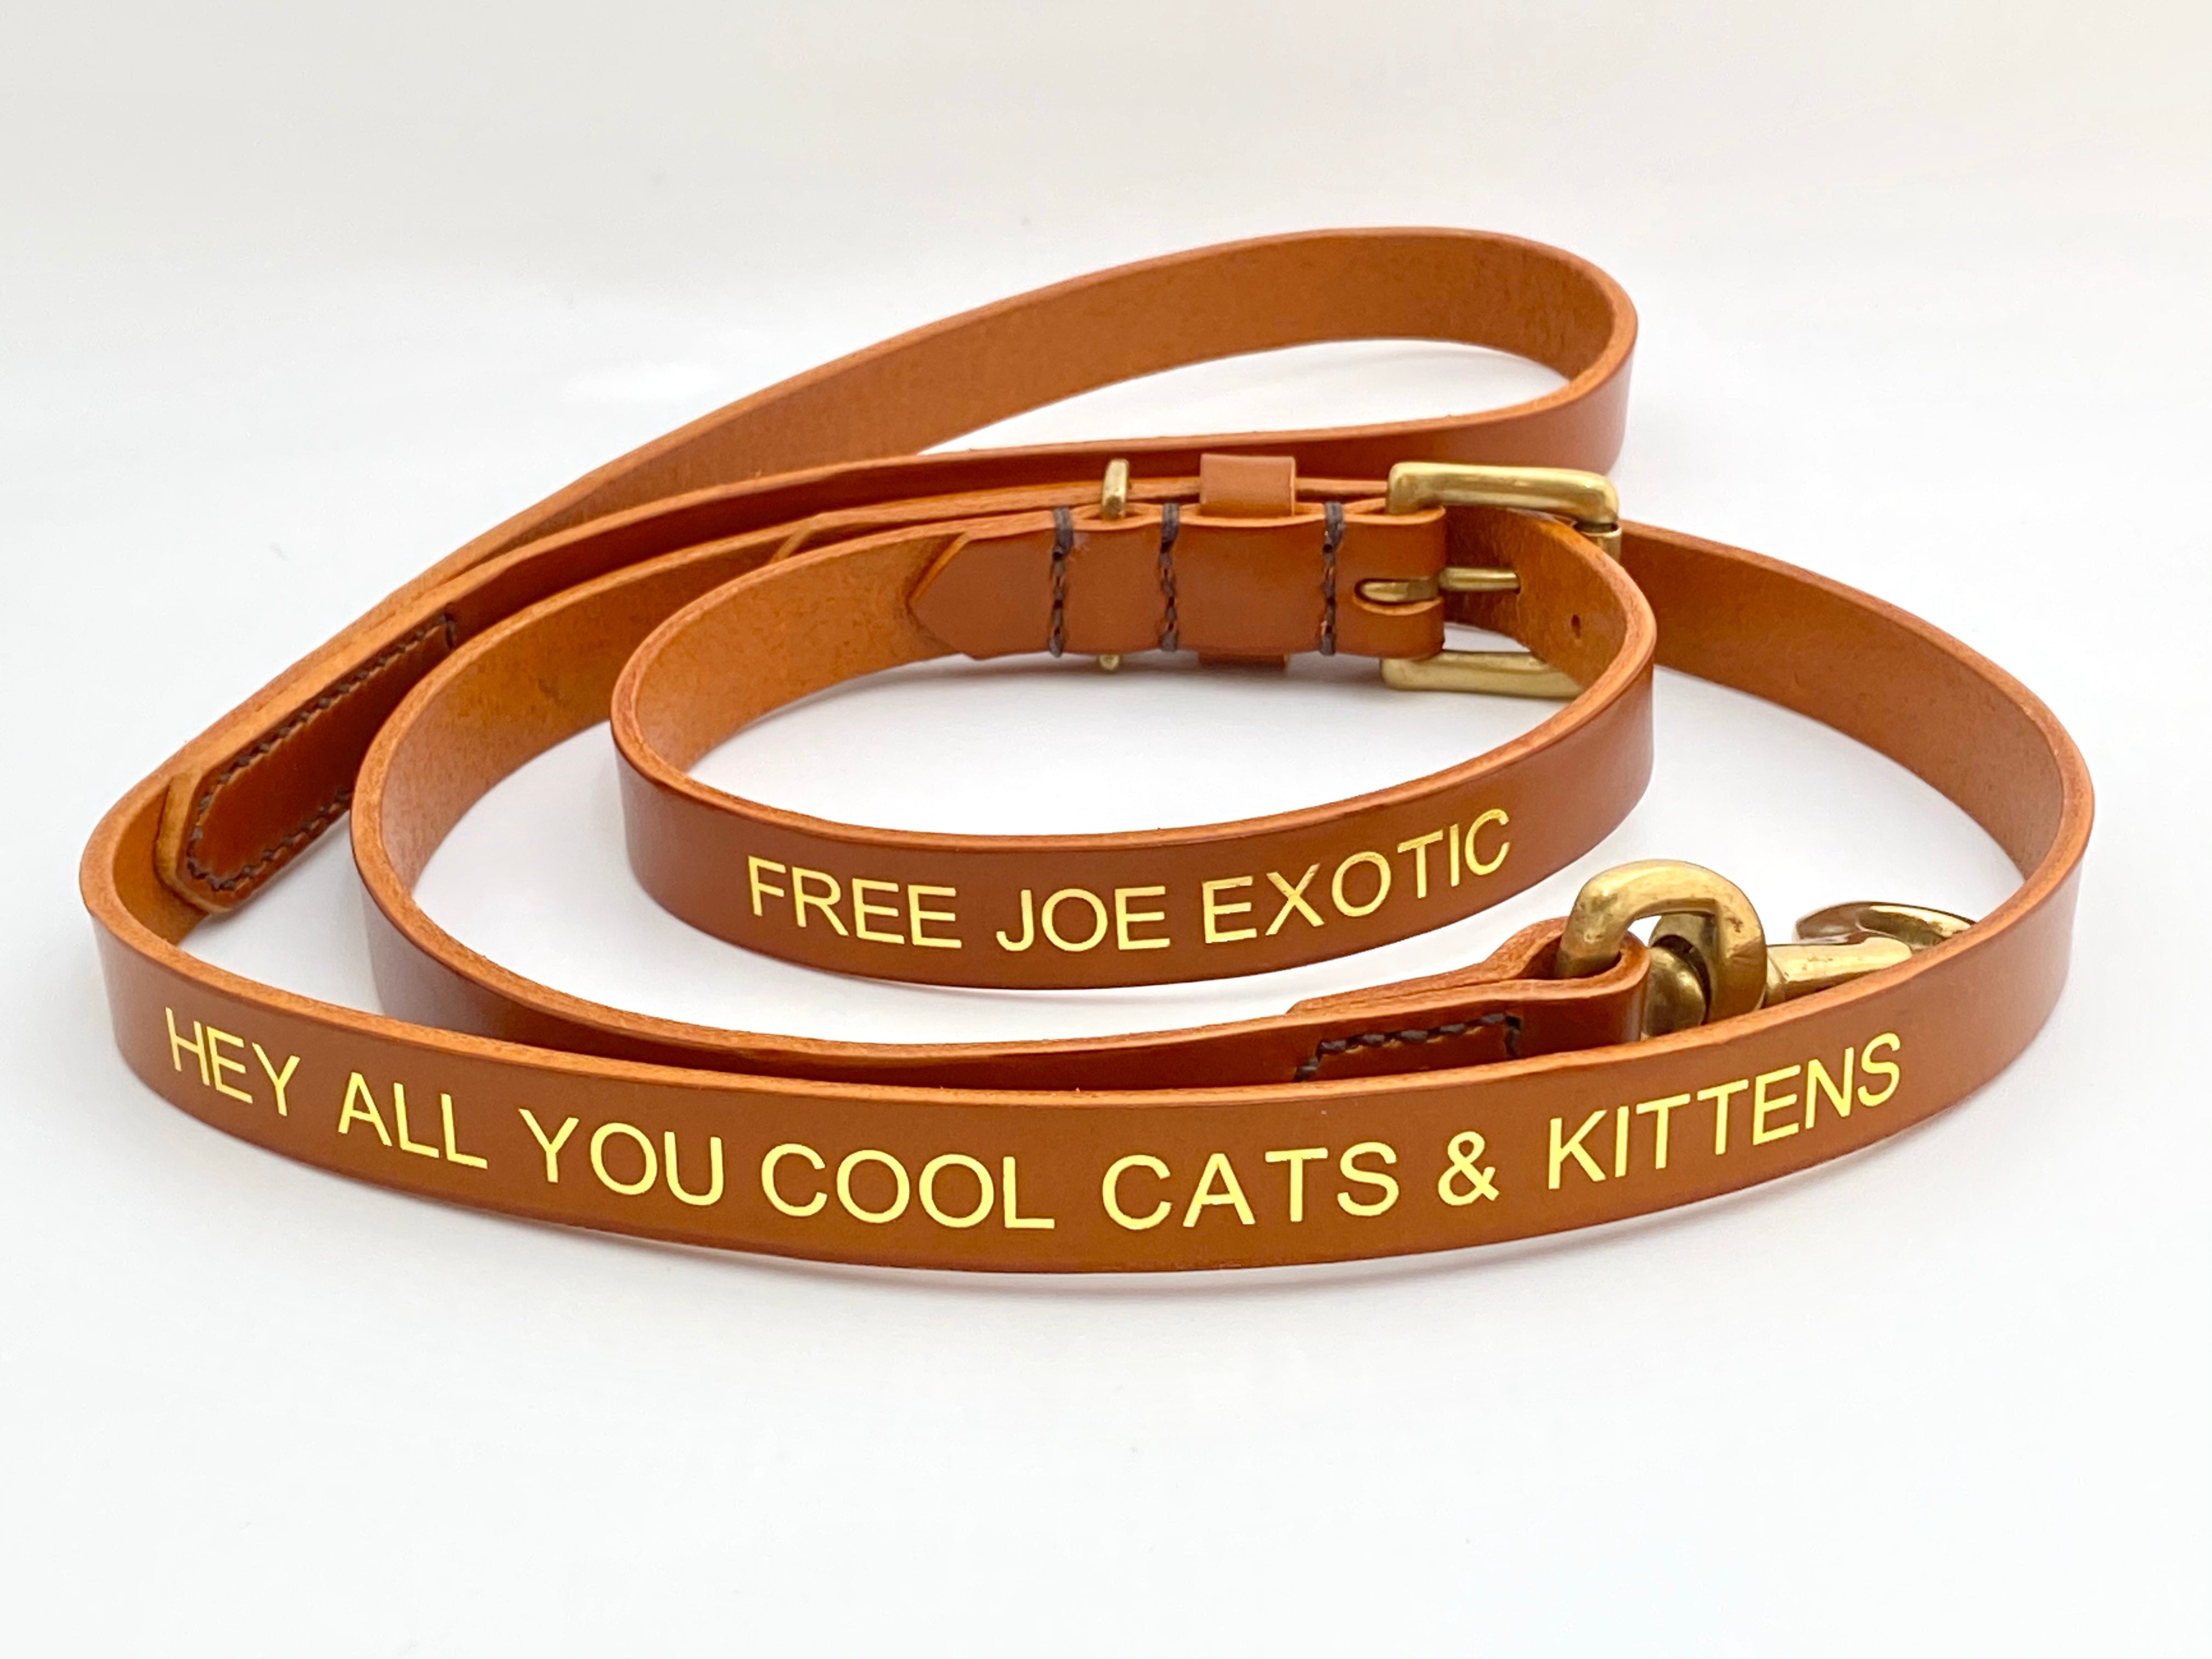 joe exotic dog collar and leash set